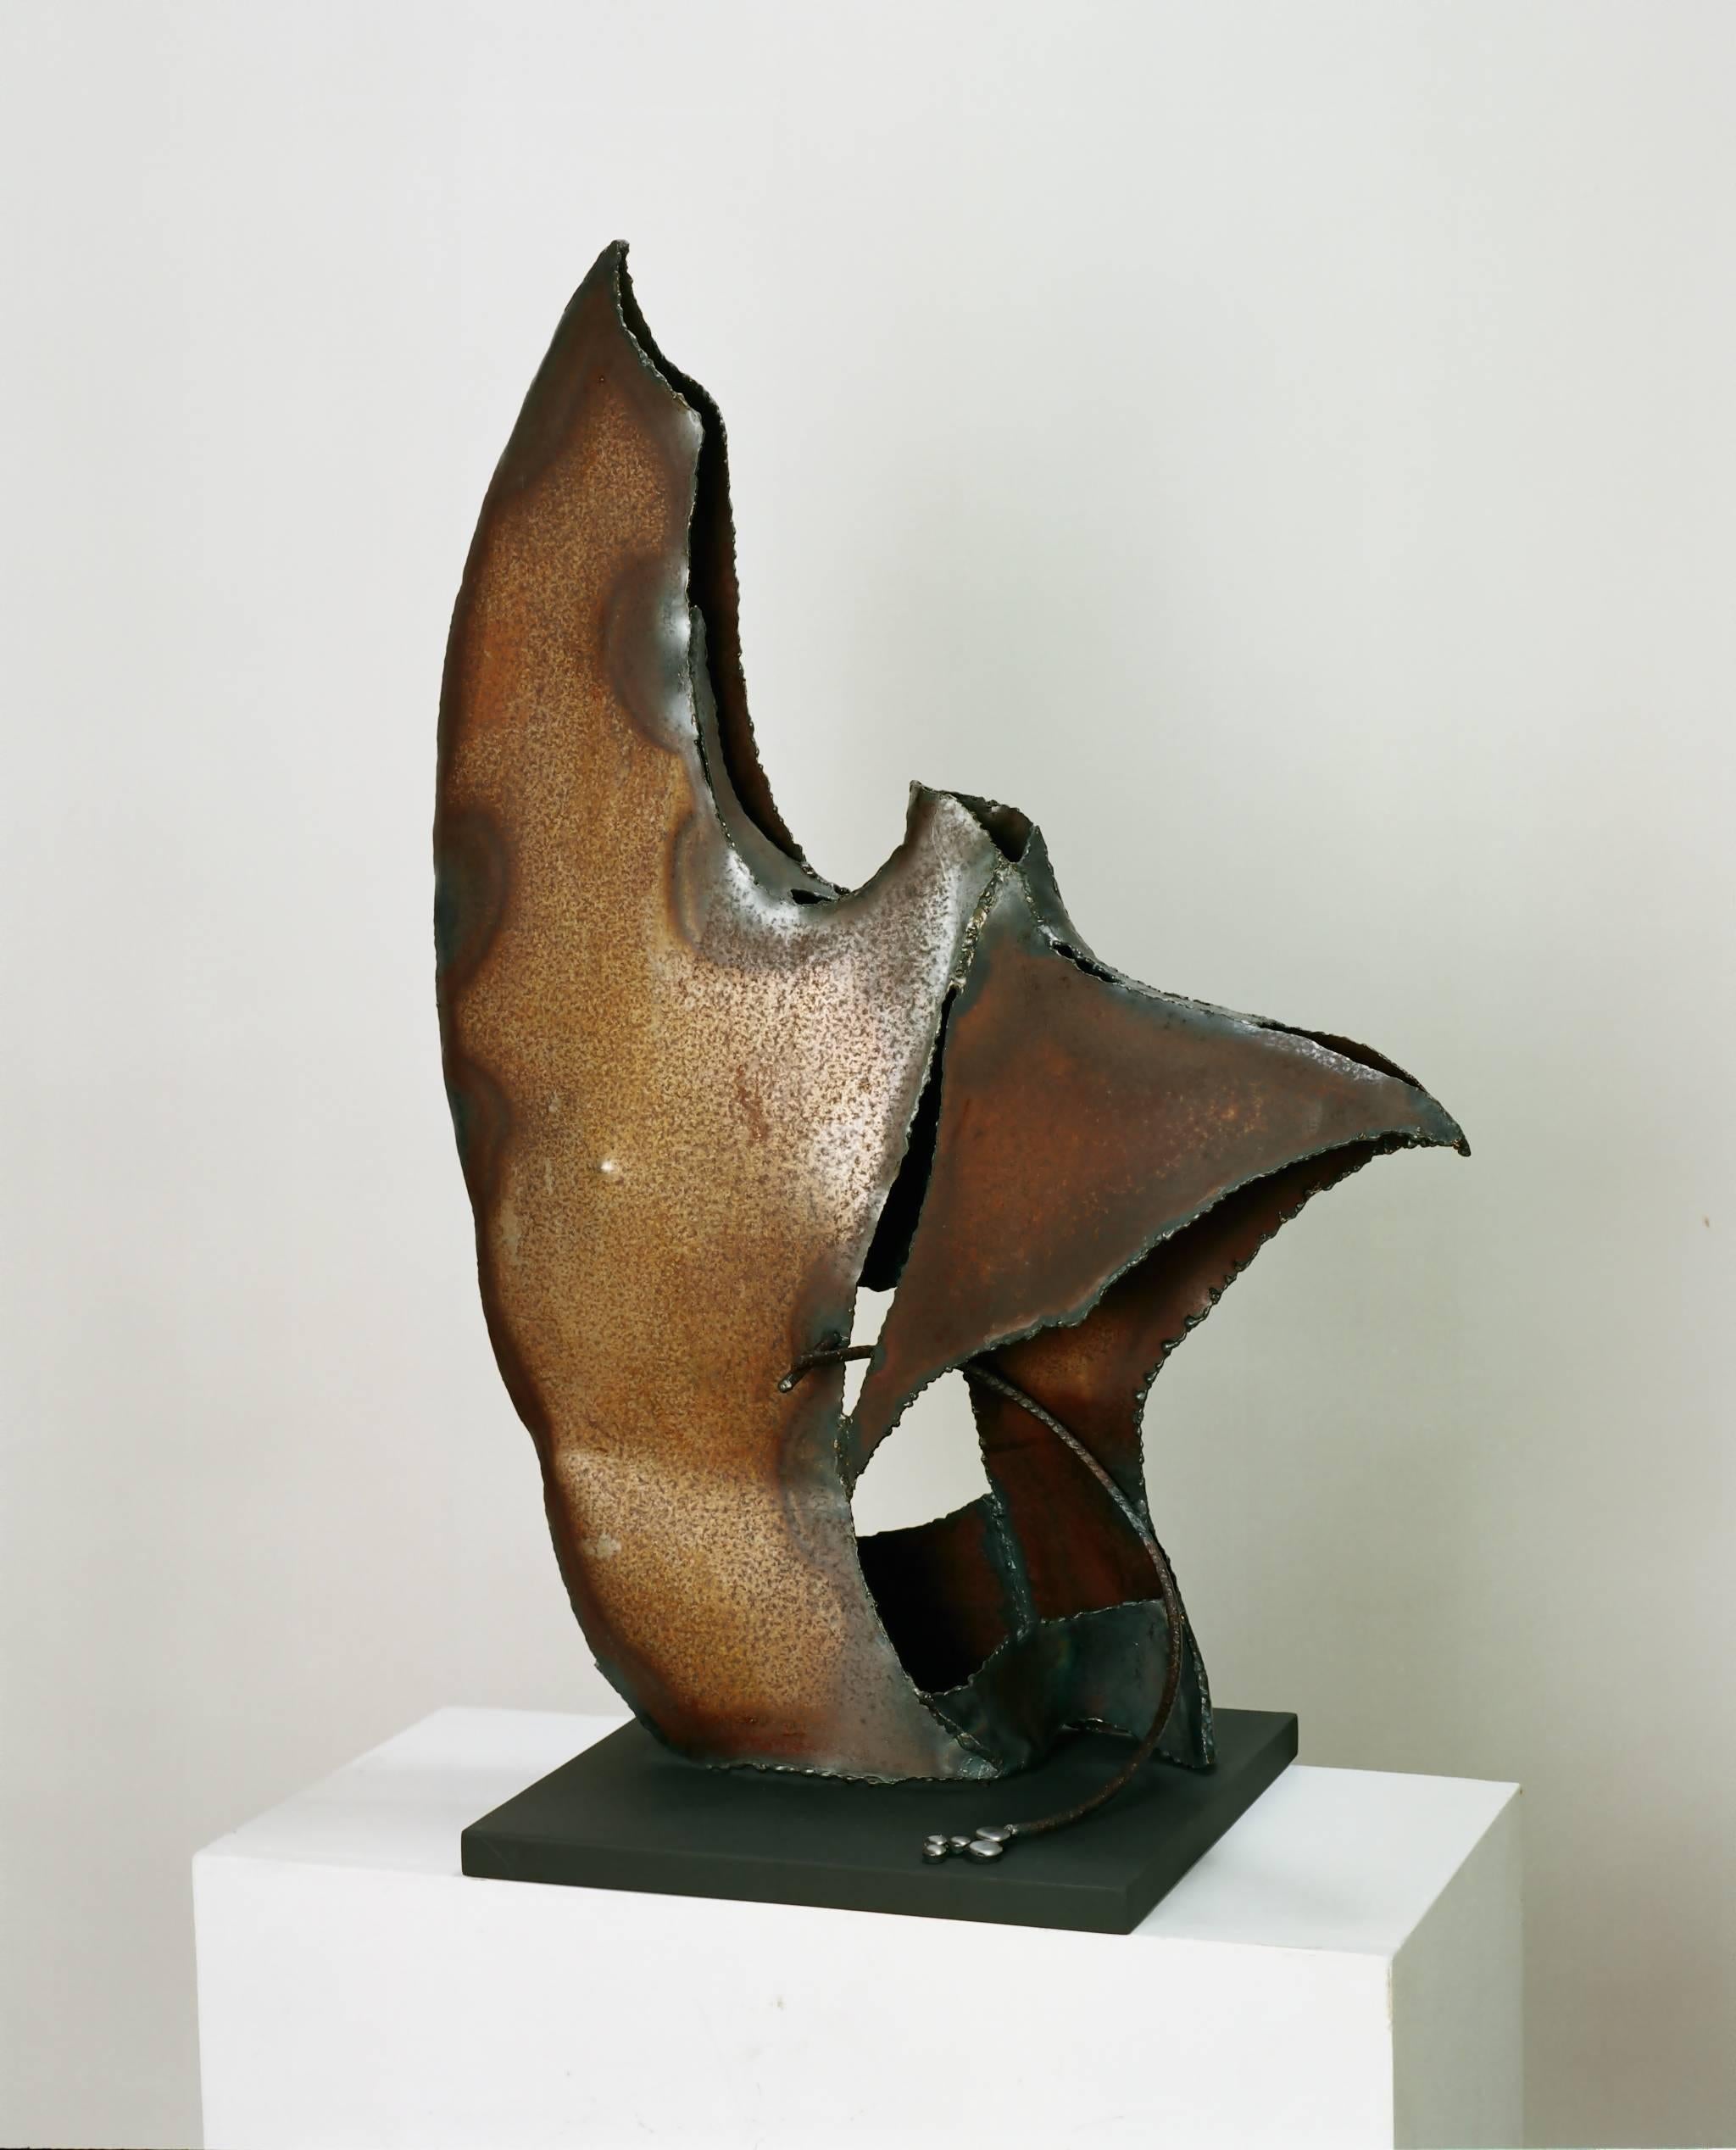 Ferran Soriano Figurative Sculpture - F. Soriano  Man  Torso "Fugues"original  steel unic piece abstract sculpture